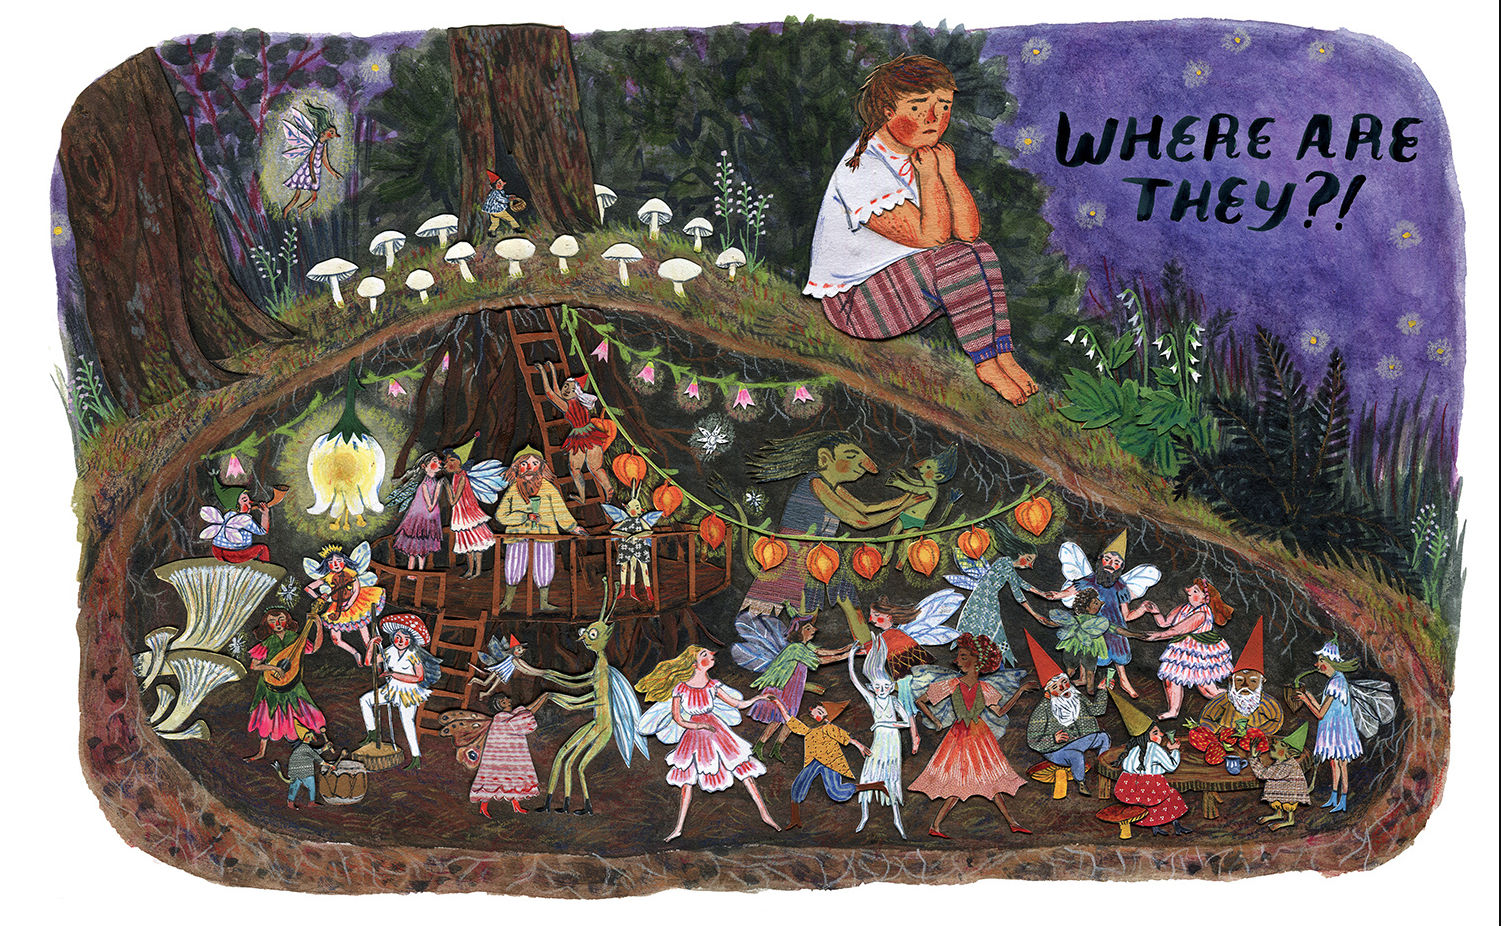 Backyard Fairies by Phoebe Wahl